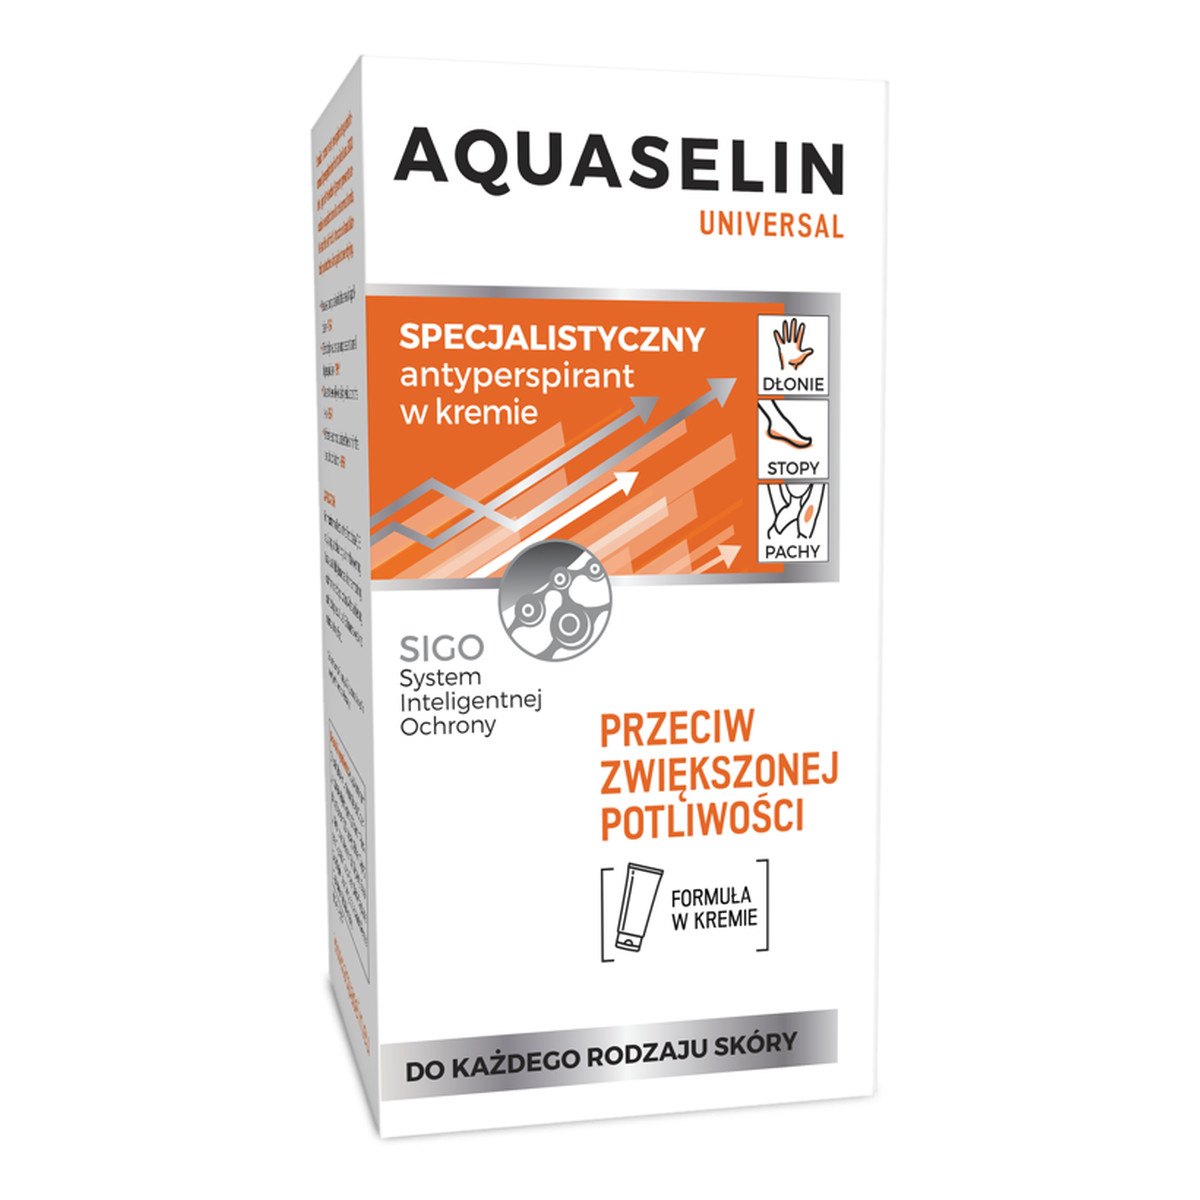 AA Aquaselin Universal Antyperspirant w Kremie 40ml